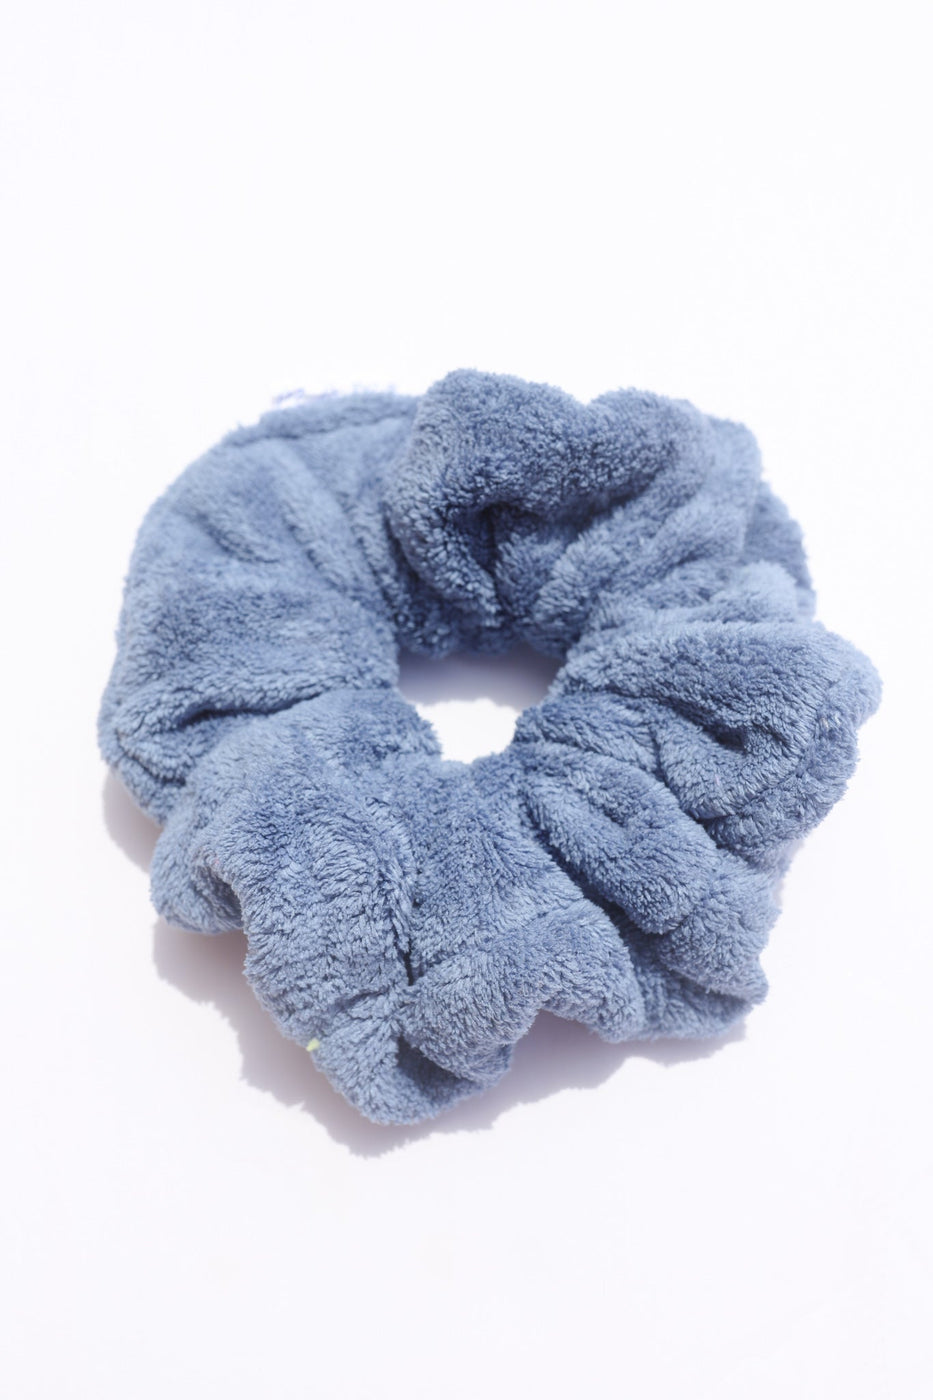 a blue hair scrunchie on a white background